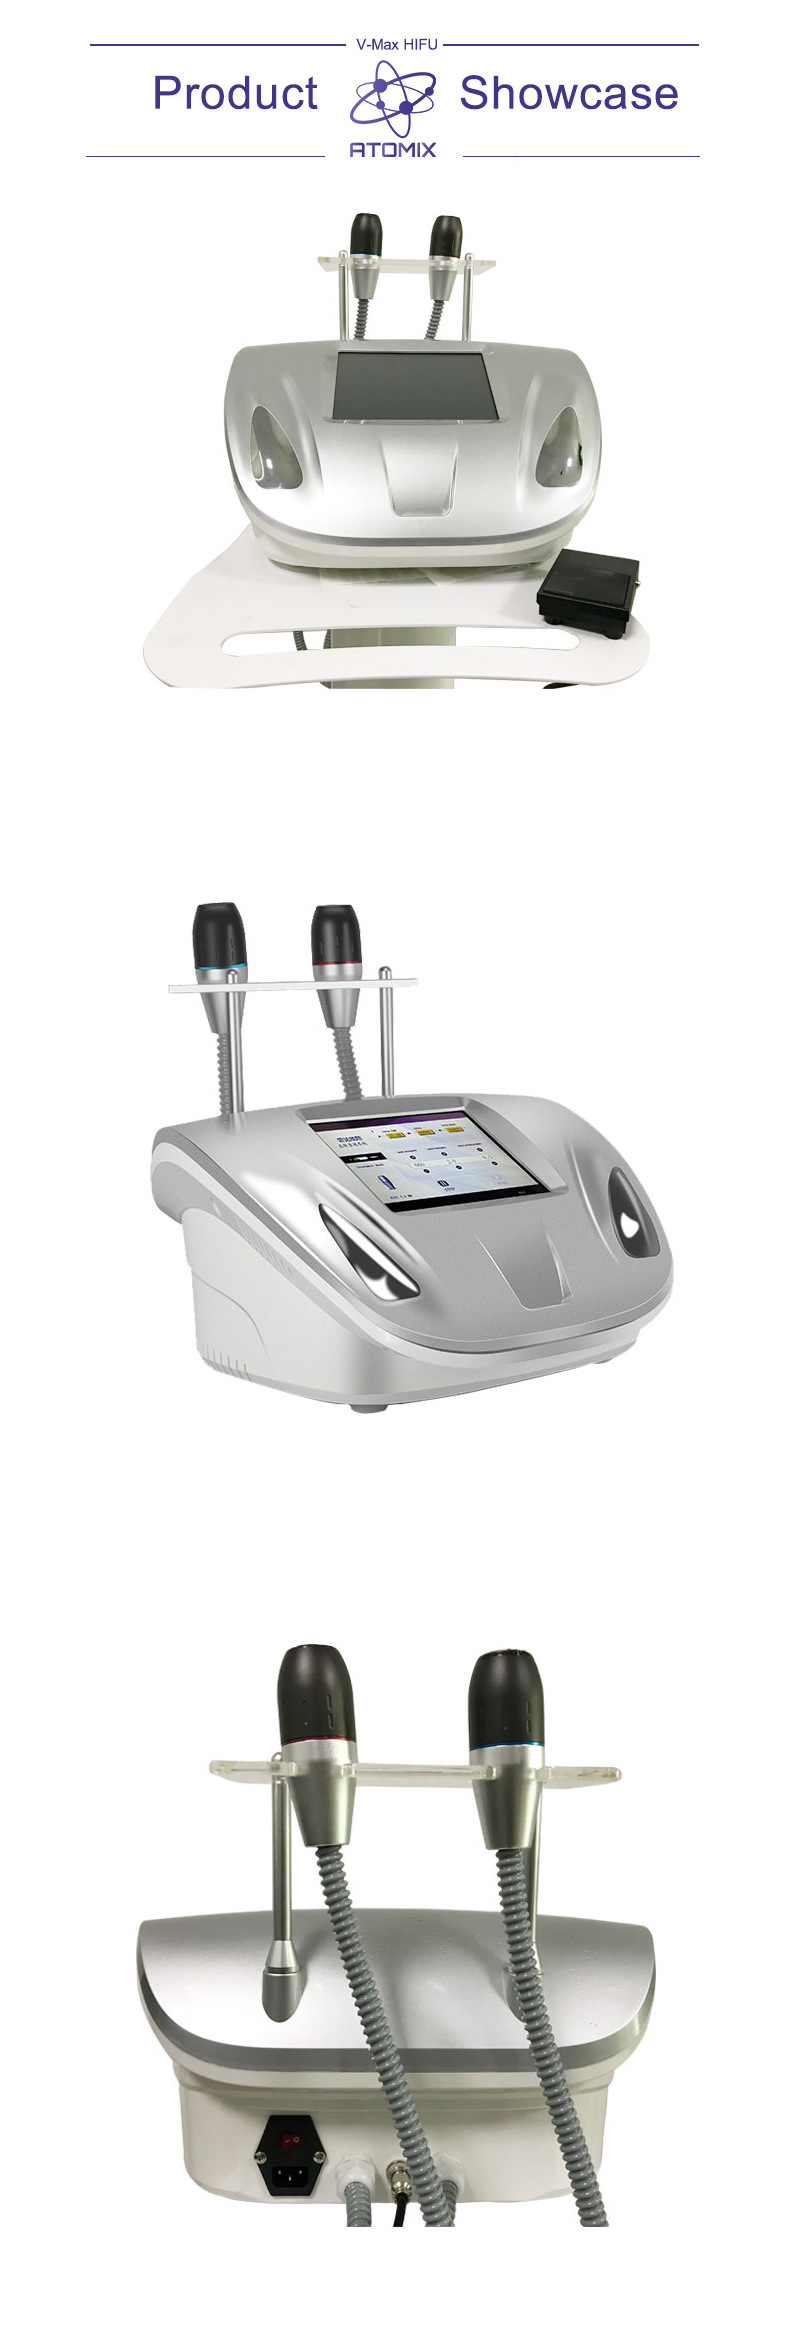 Cartridge-Less Ultrasound Machine No Waste in Parts Maintenance Free